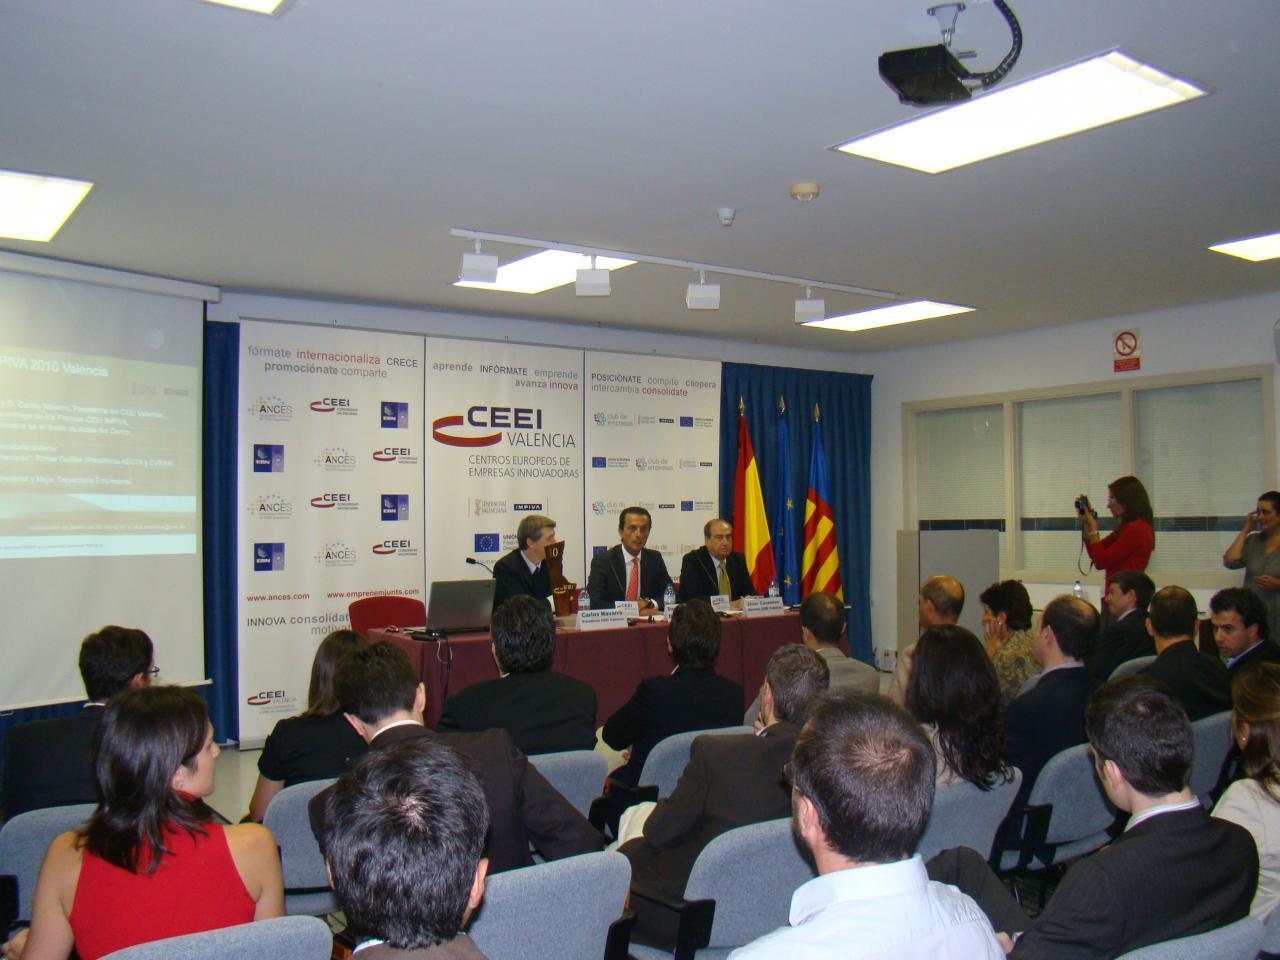 Mesa presidencial: Daniel Moragues Director IMPIVA, Carlos Navarro Presidente CEEI Valencia, Jess Casanova Director CEEI Valencia